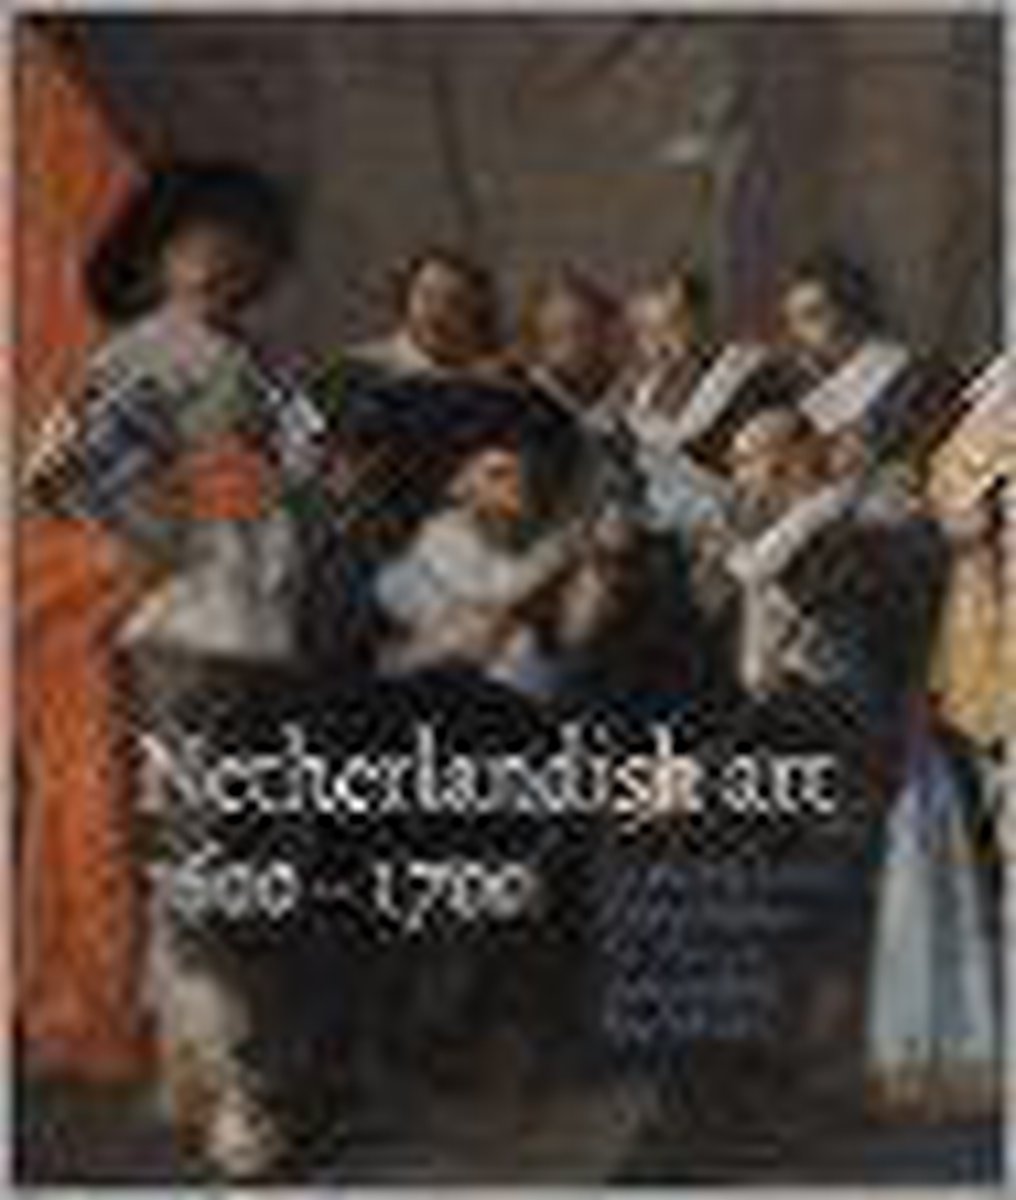 Netherlandish Art in the Rijksmuseum